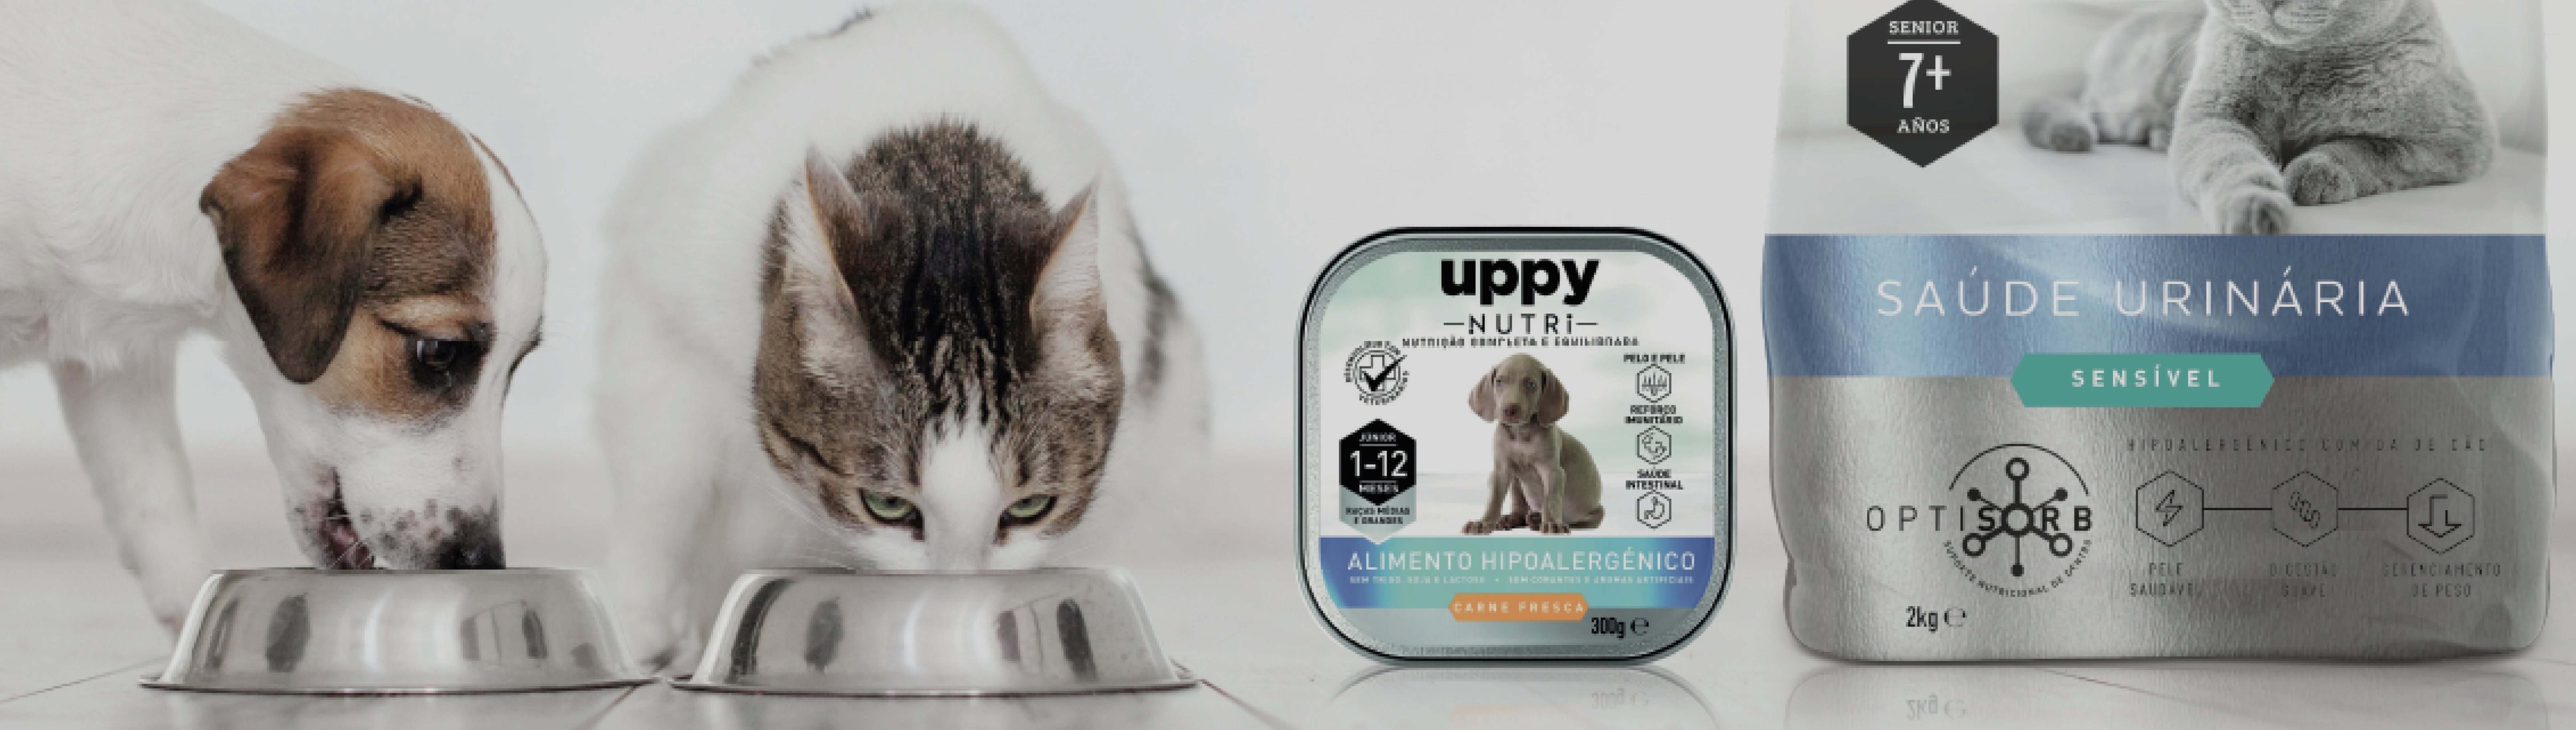 Uppy Pet Food packaging design